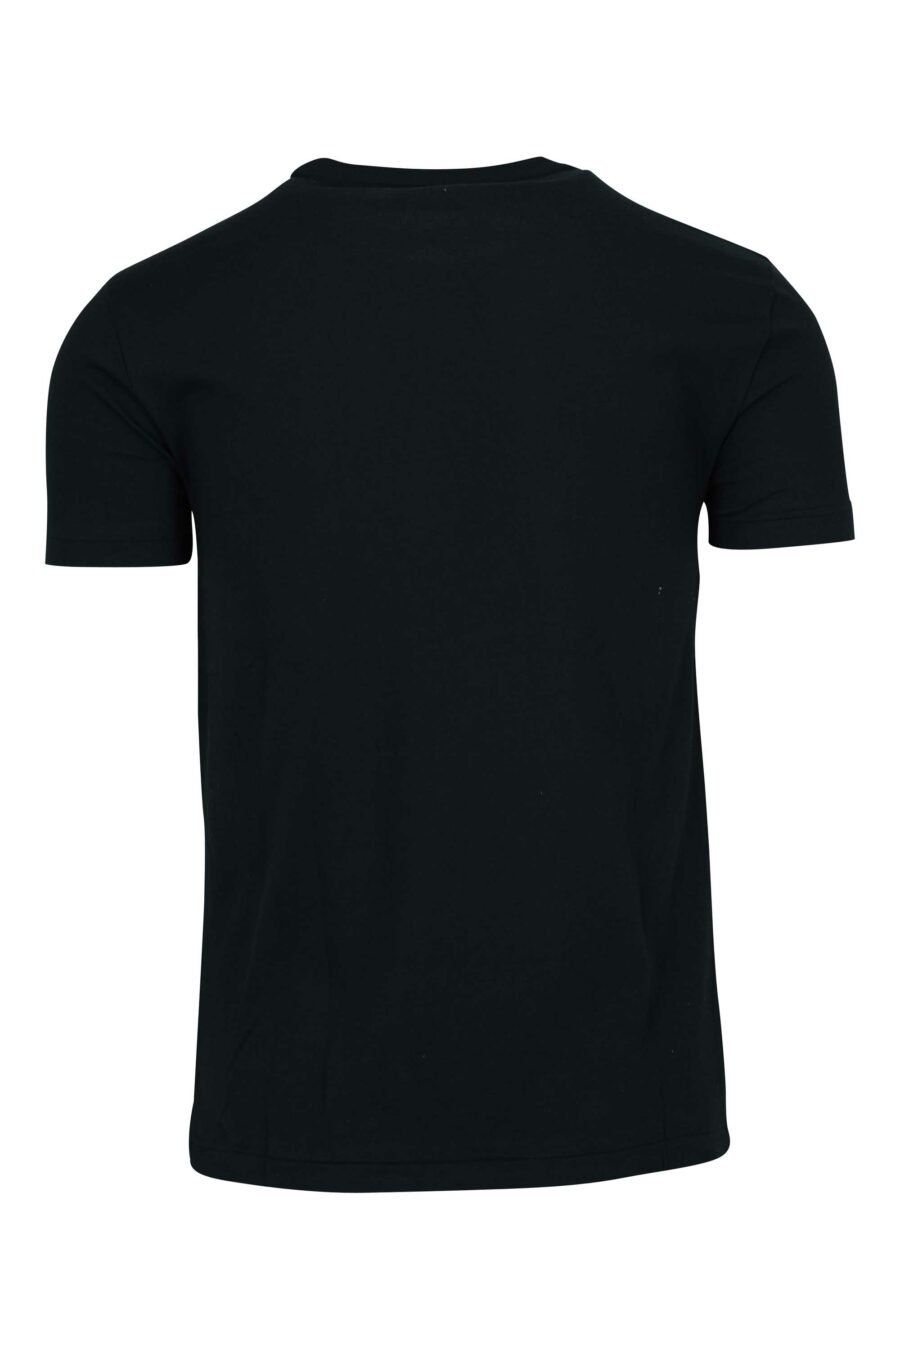 Black T-shirt with mini-logo "polo" - 5045018254620 1